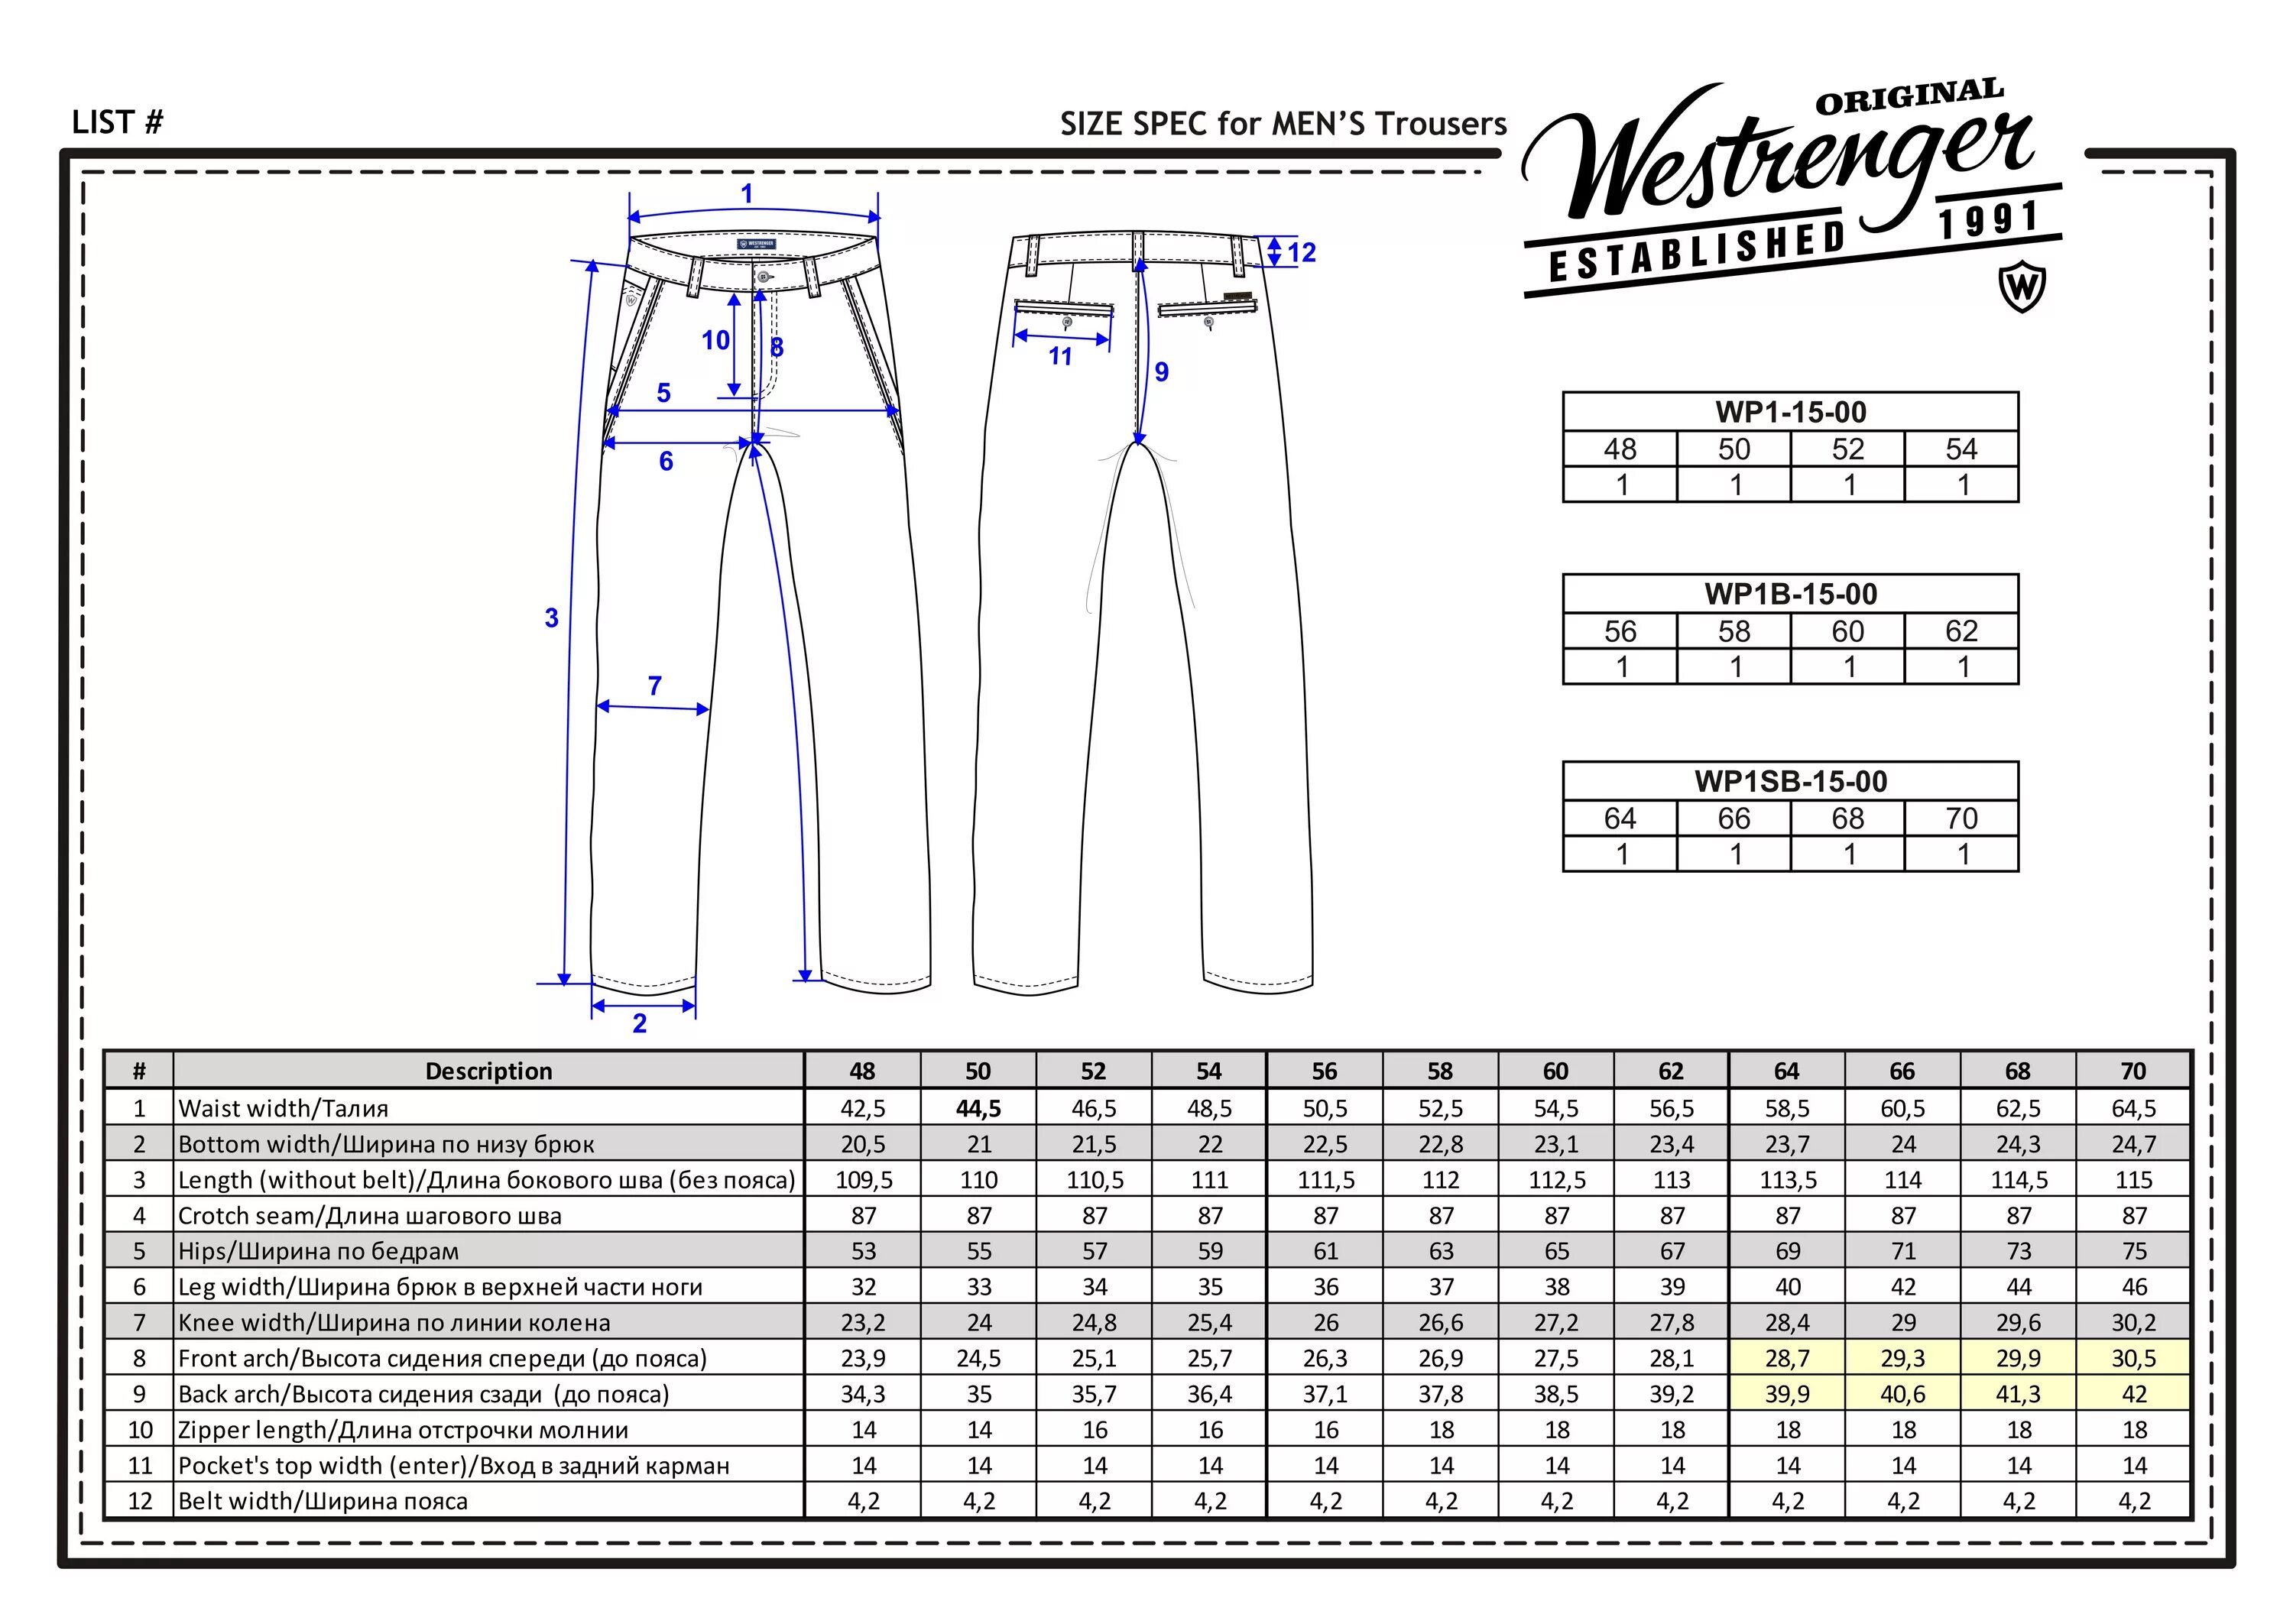 Размеры брюк для мужчин таблица размеров. Таблица измерения штанов. Таблица измерений спортивных штанов для мужчин. Схема измерения брюк мужских. Размер классических брюк мужских